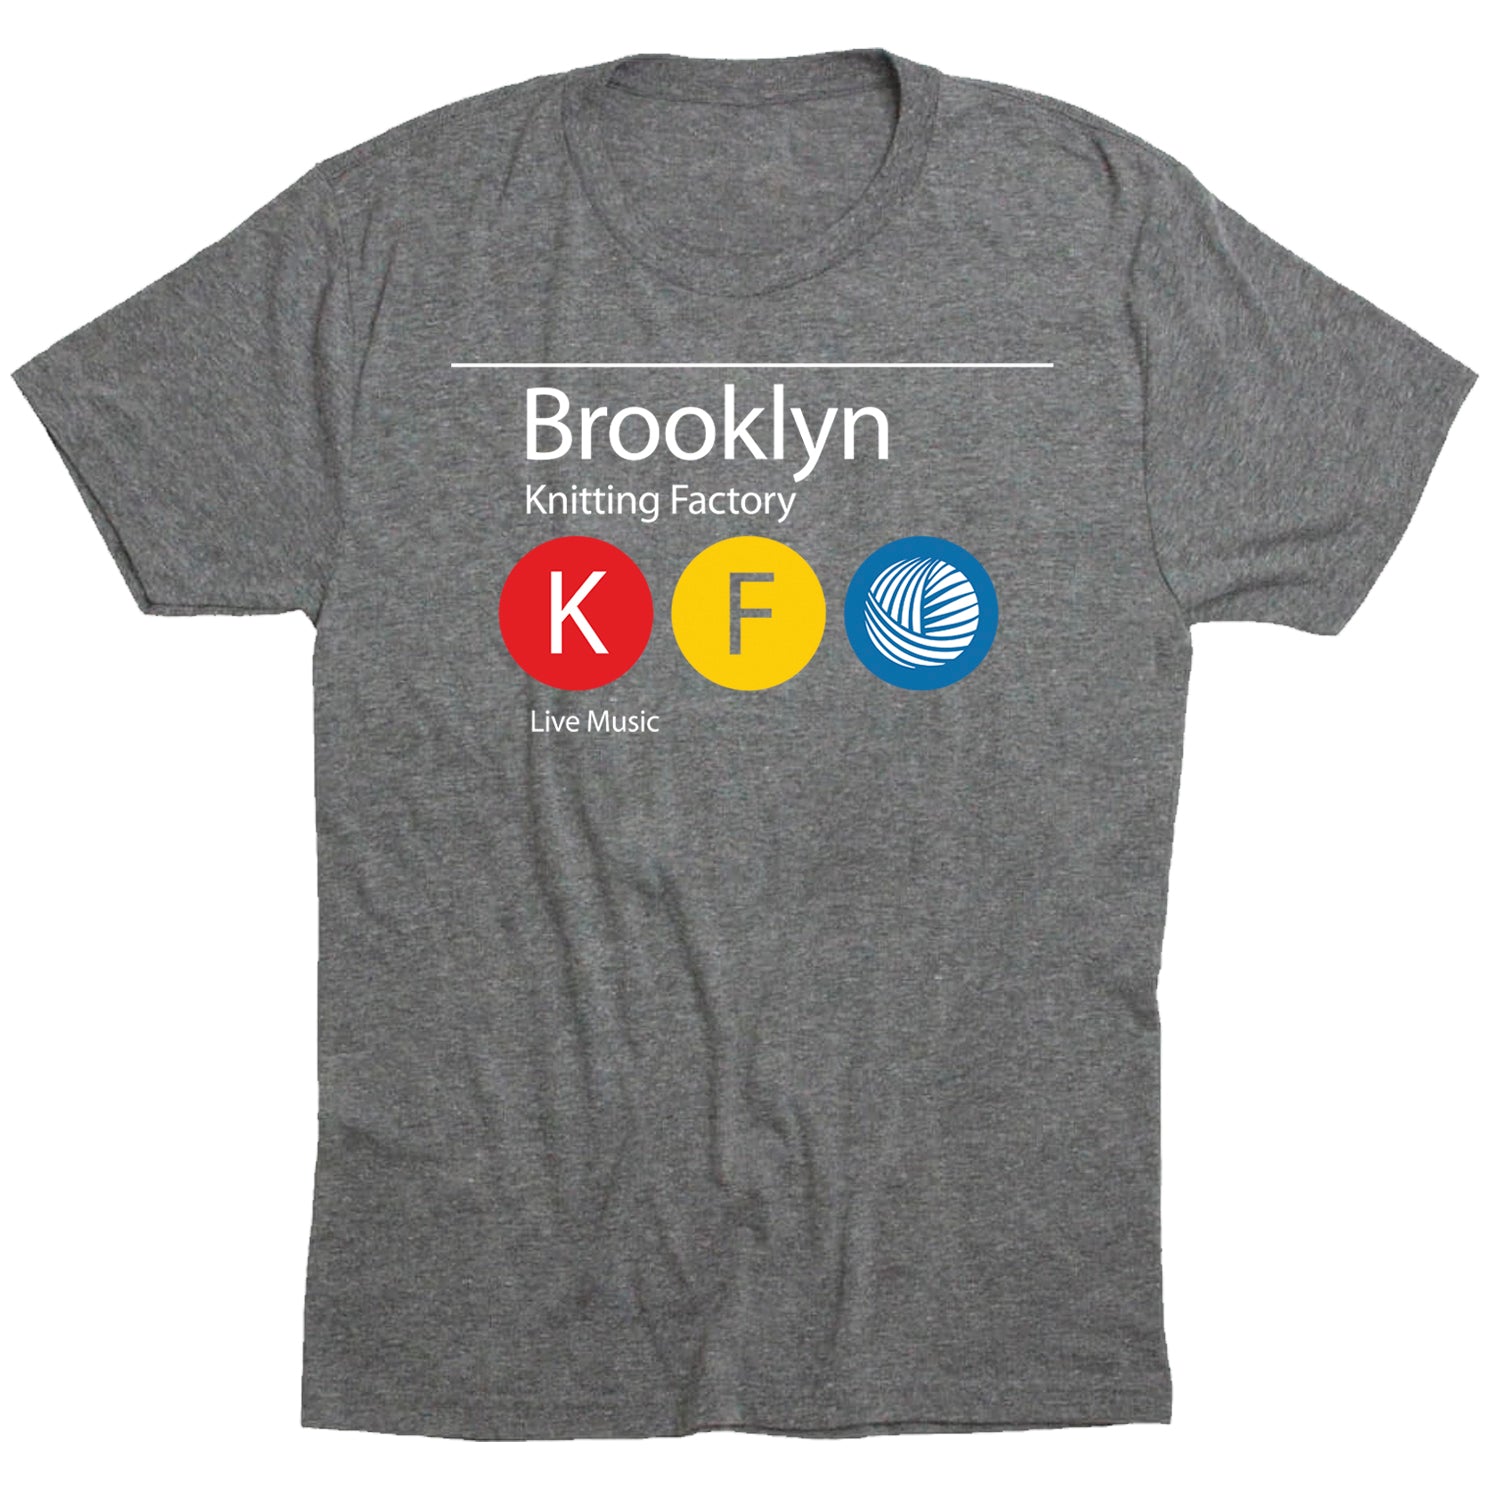 knitting factory brooklyn subway t-shirt heather gray